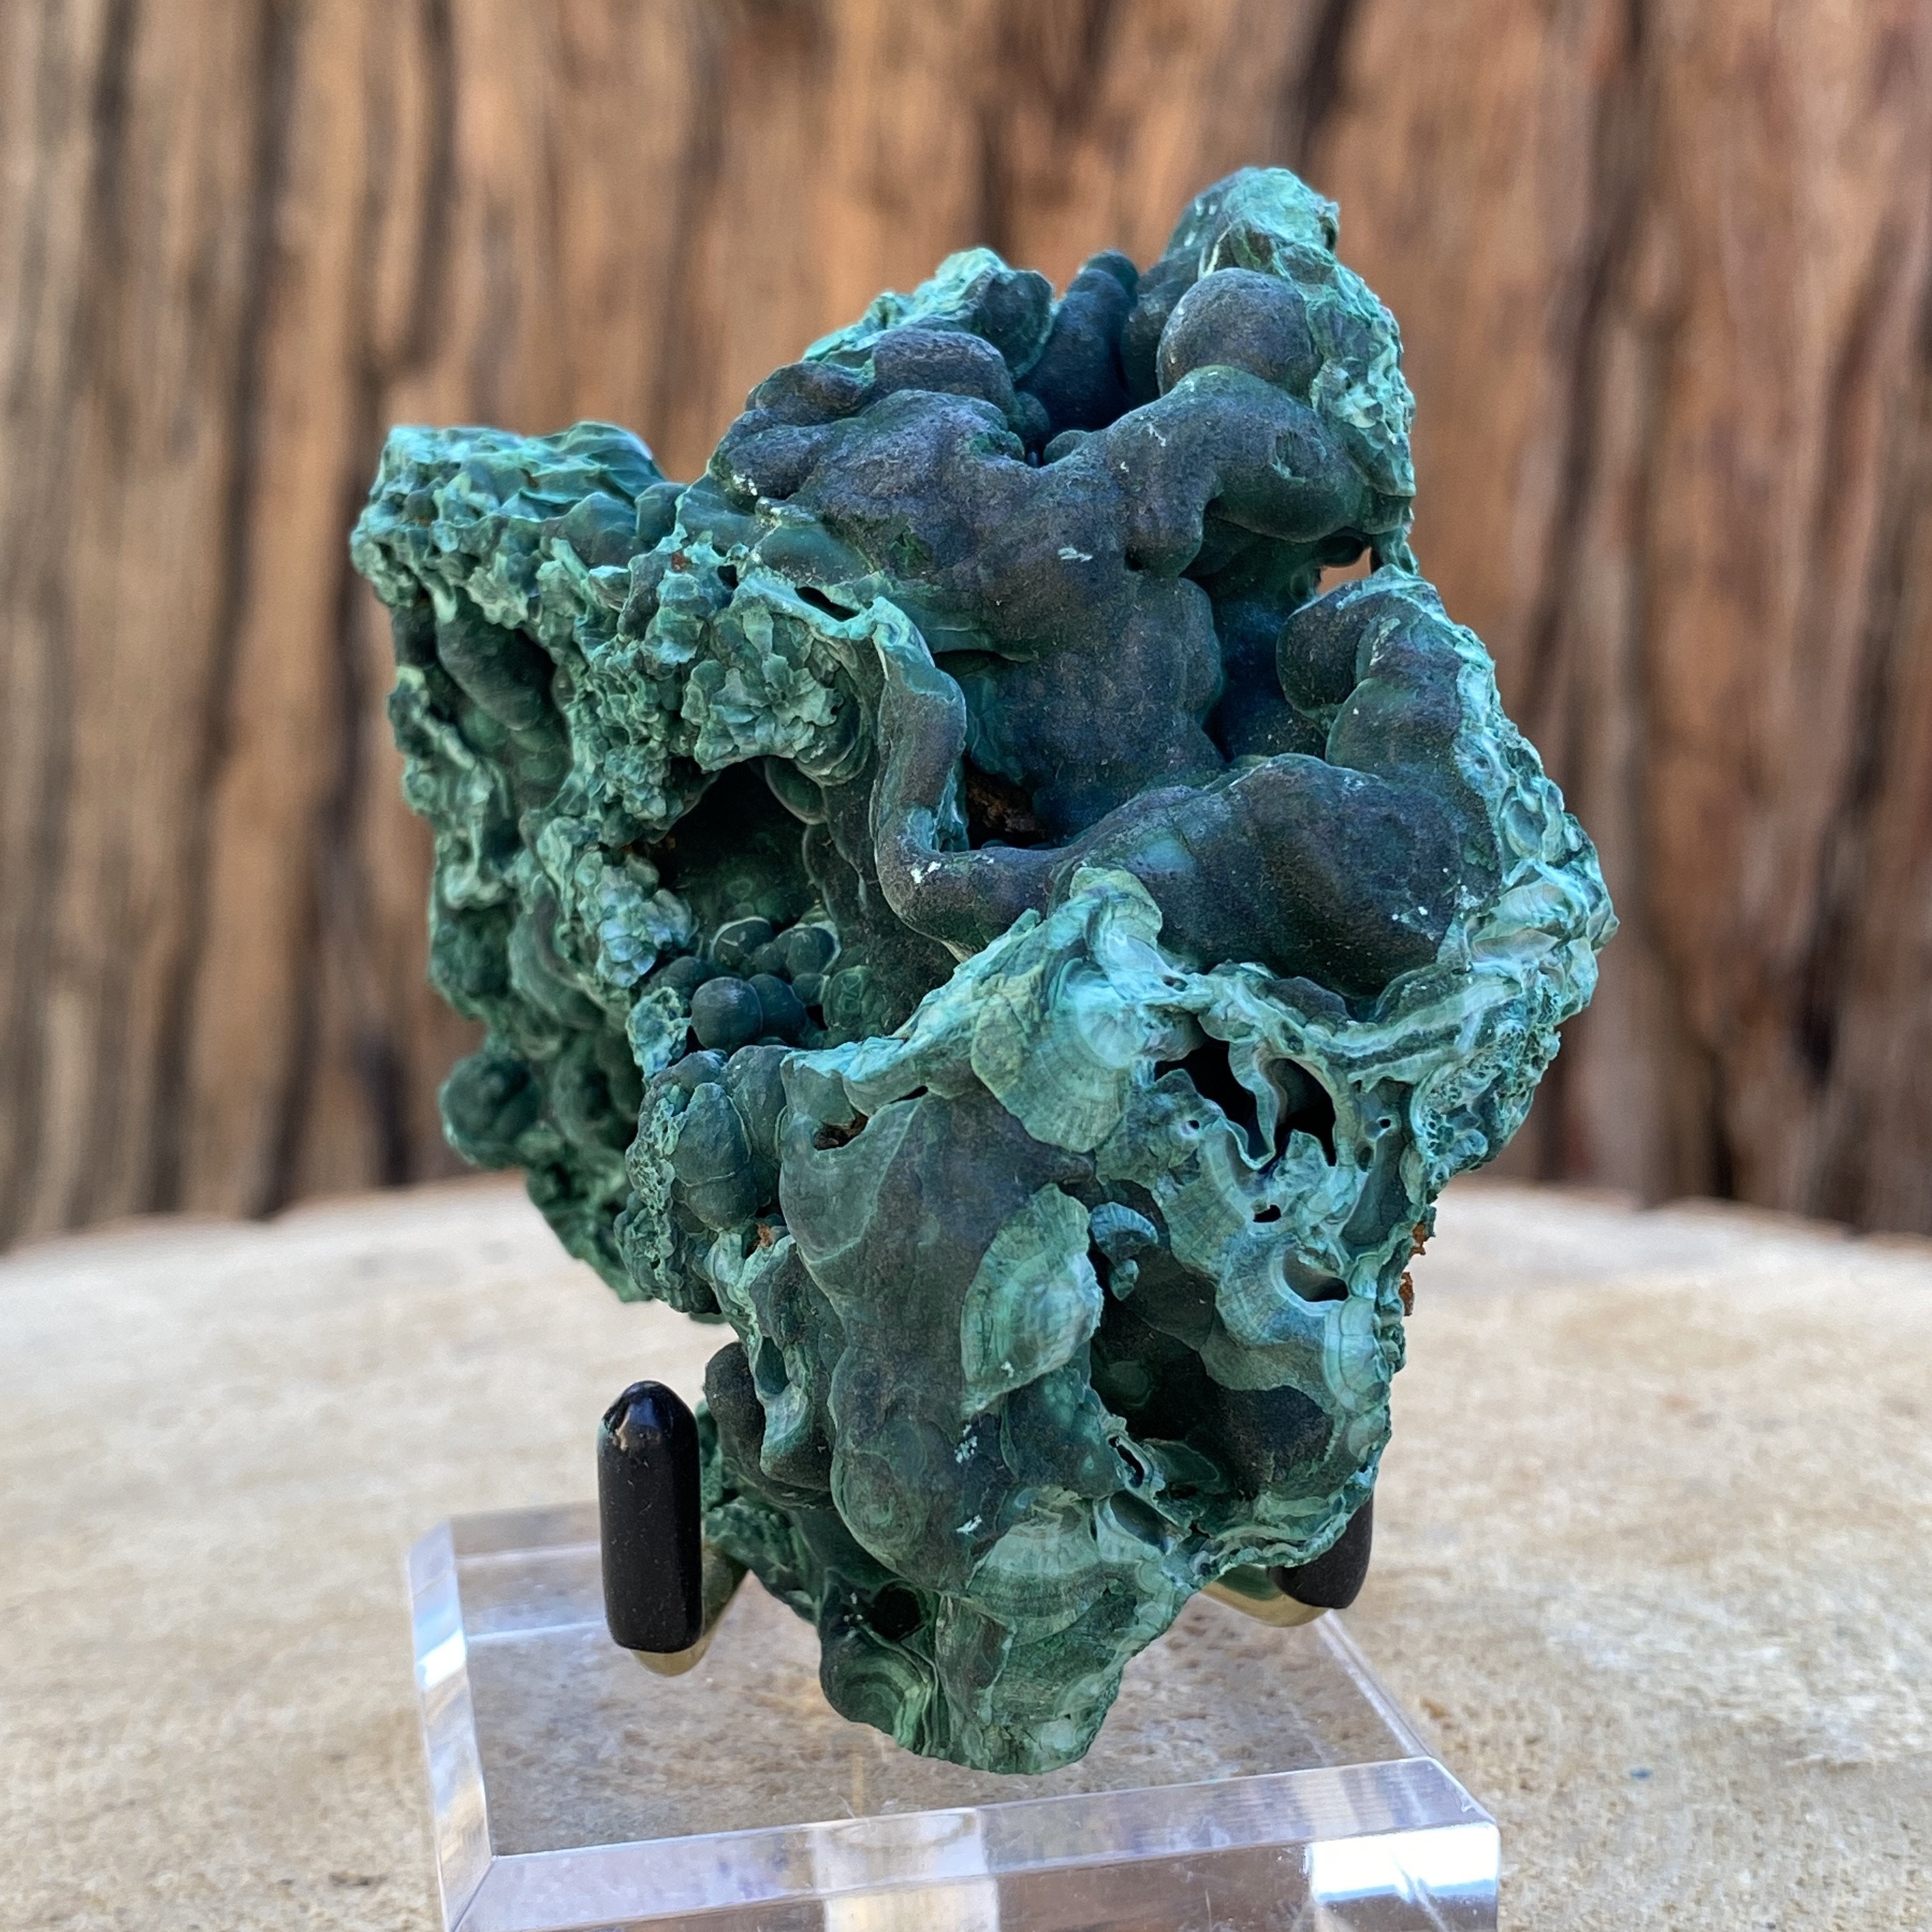 200g 8.5x7.5x5cm Green Shiny Malachite from Laos - Locco Decor